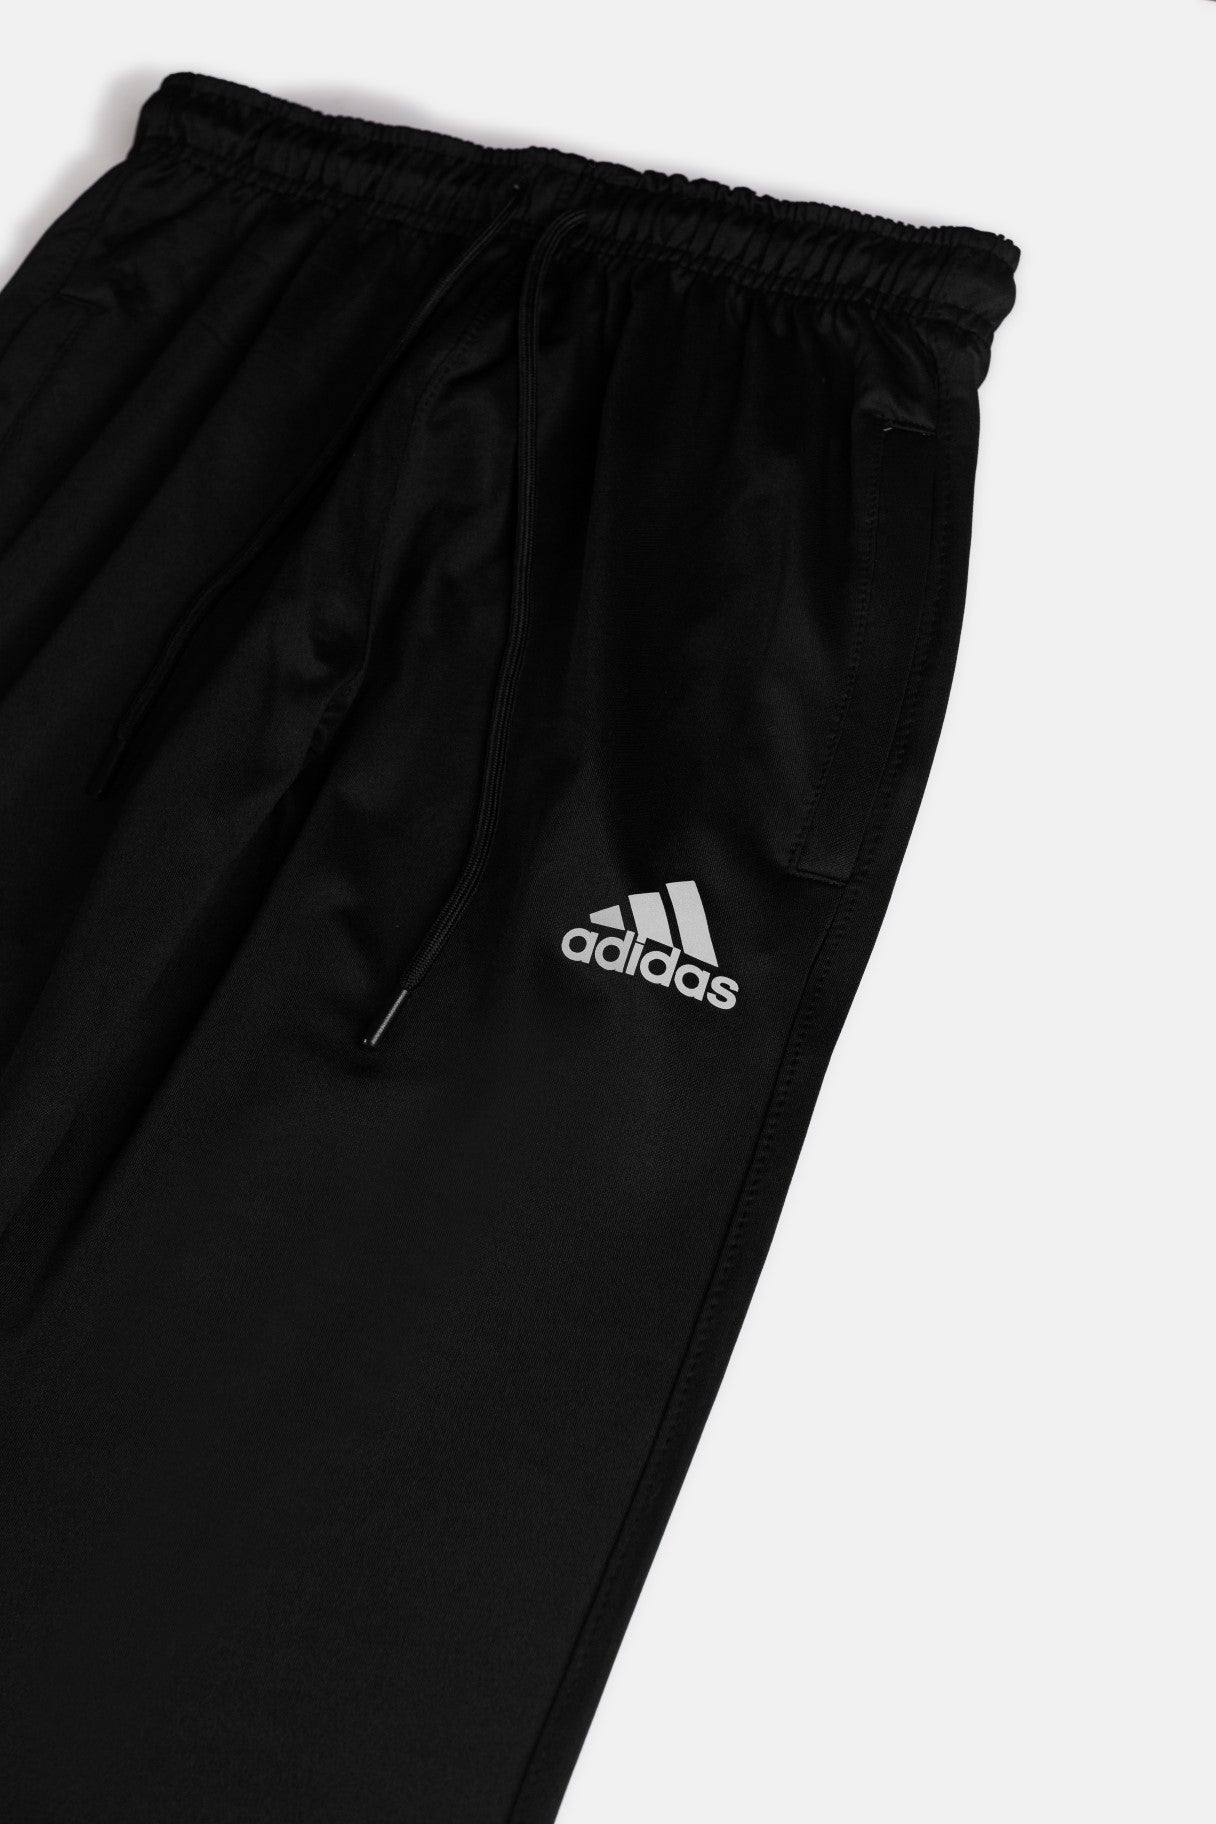 Adidas Premium Sports 3 Stripes Trouser – Black